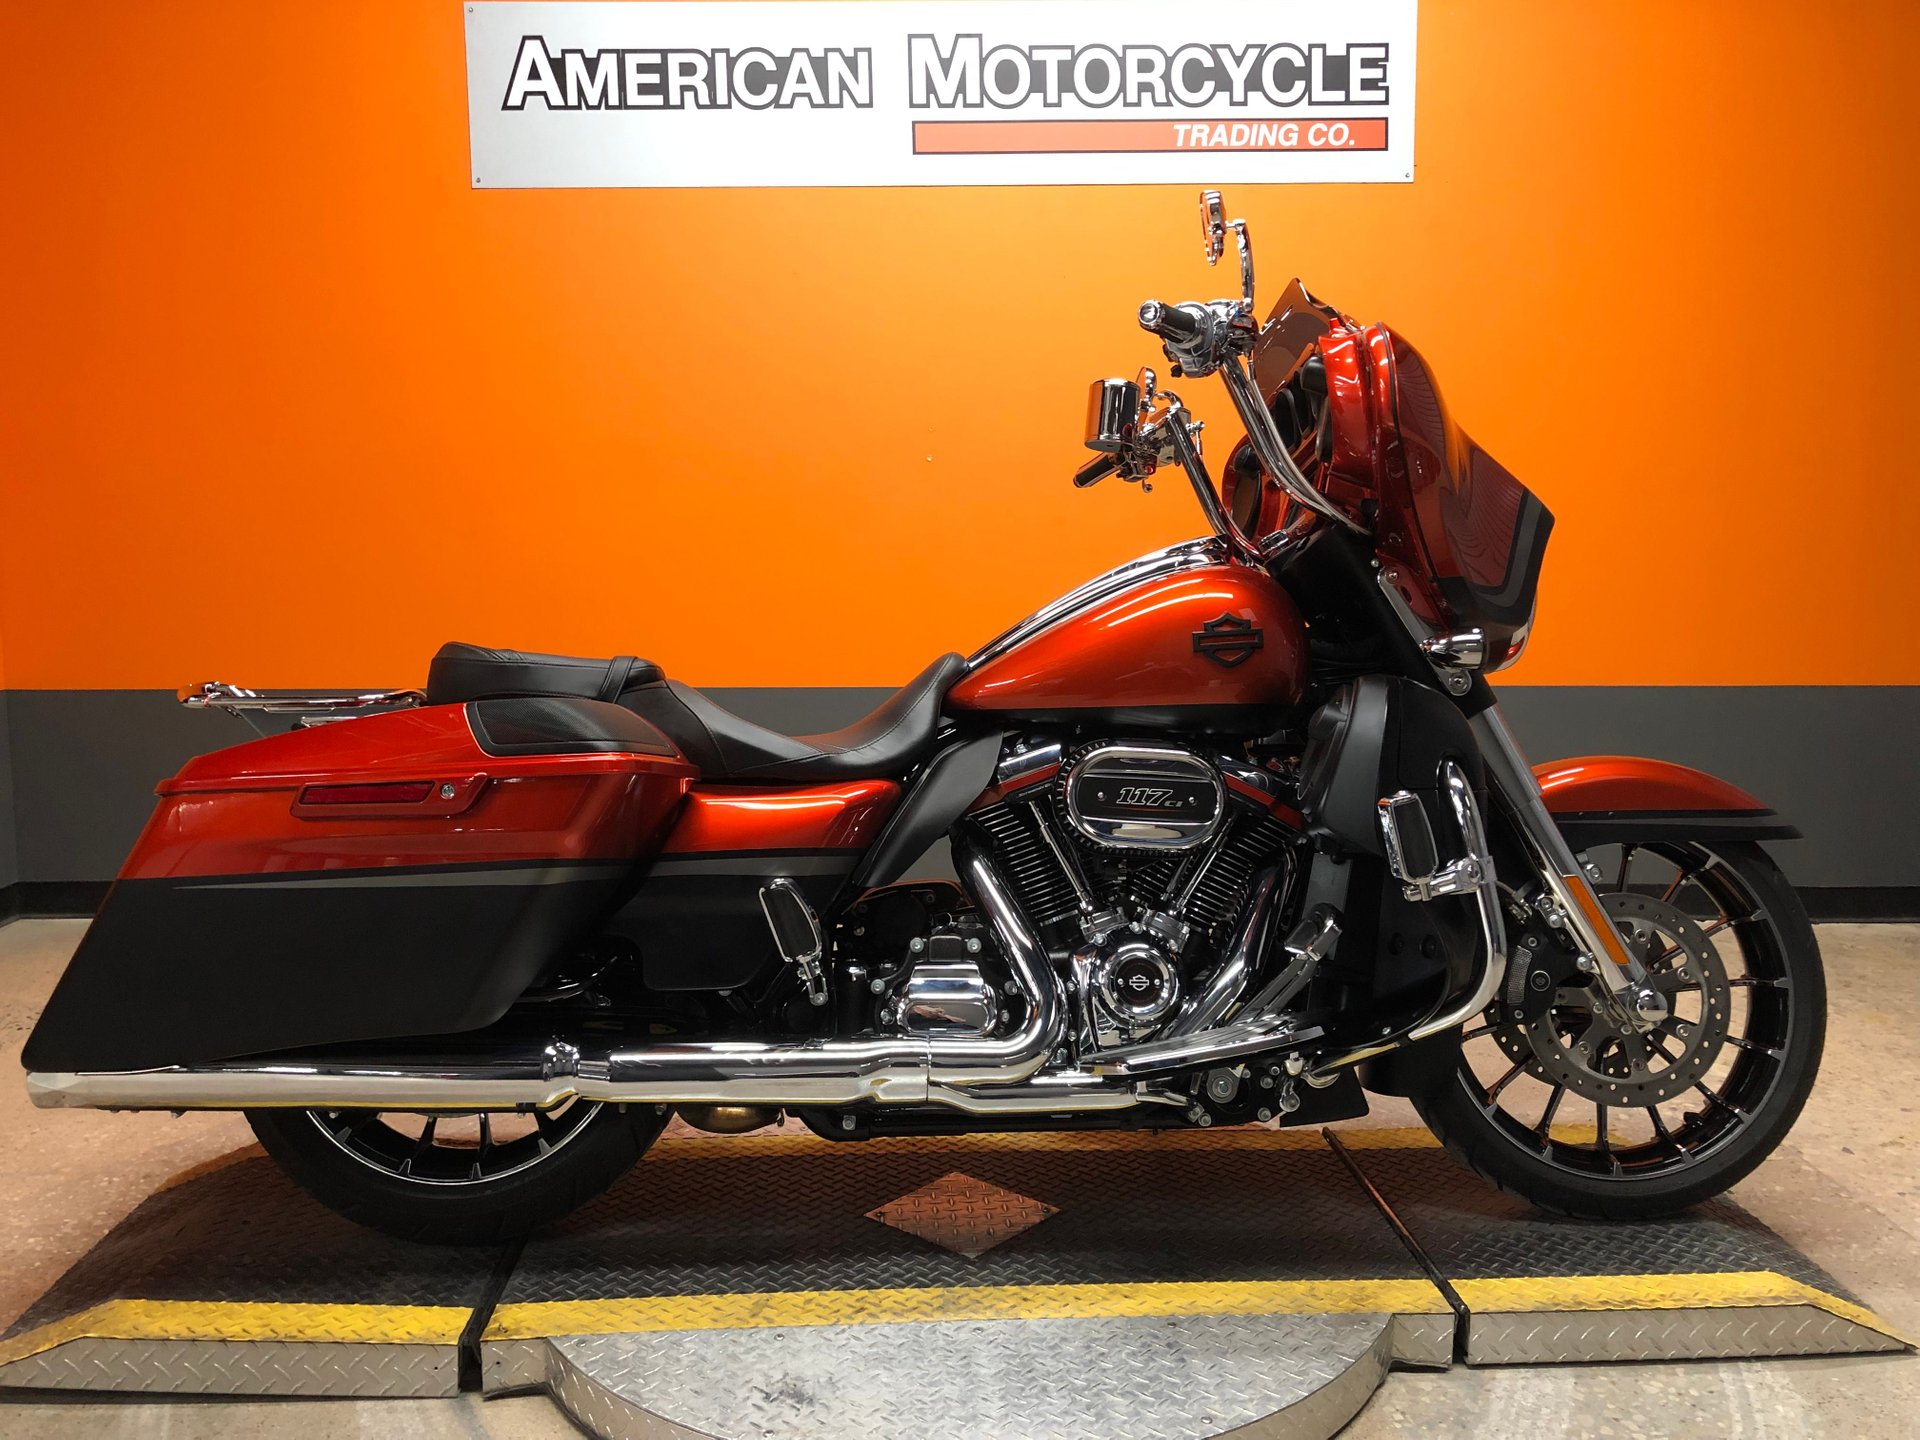 2018 Harley Davidson Cvo Street Glide American Motorcycle Trading Company Used Harley Davidson Motorcycles